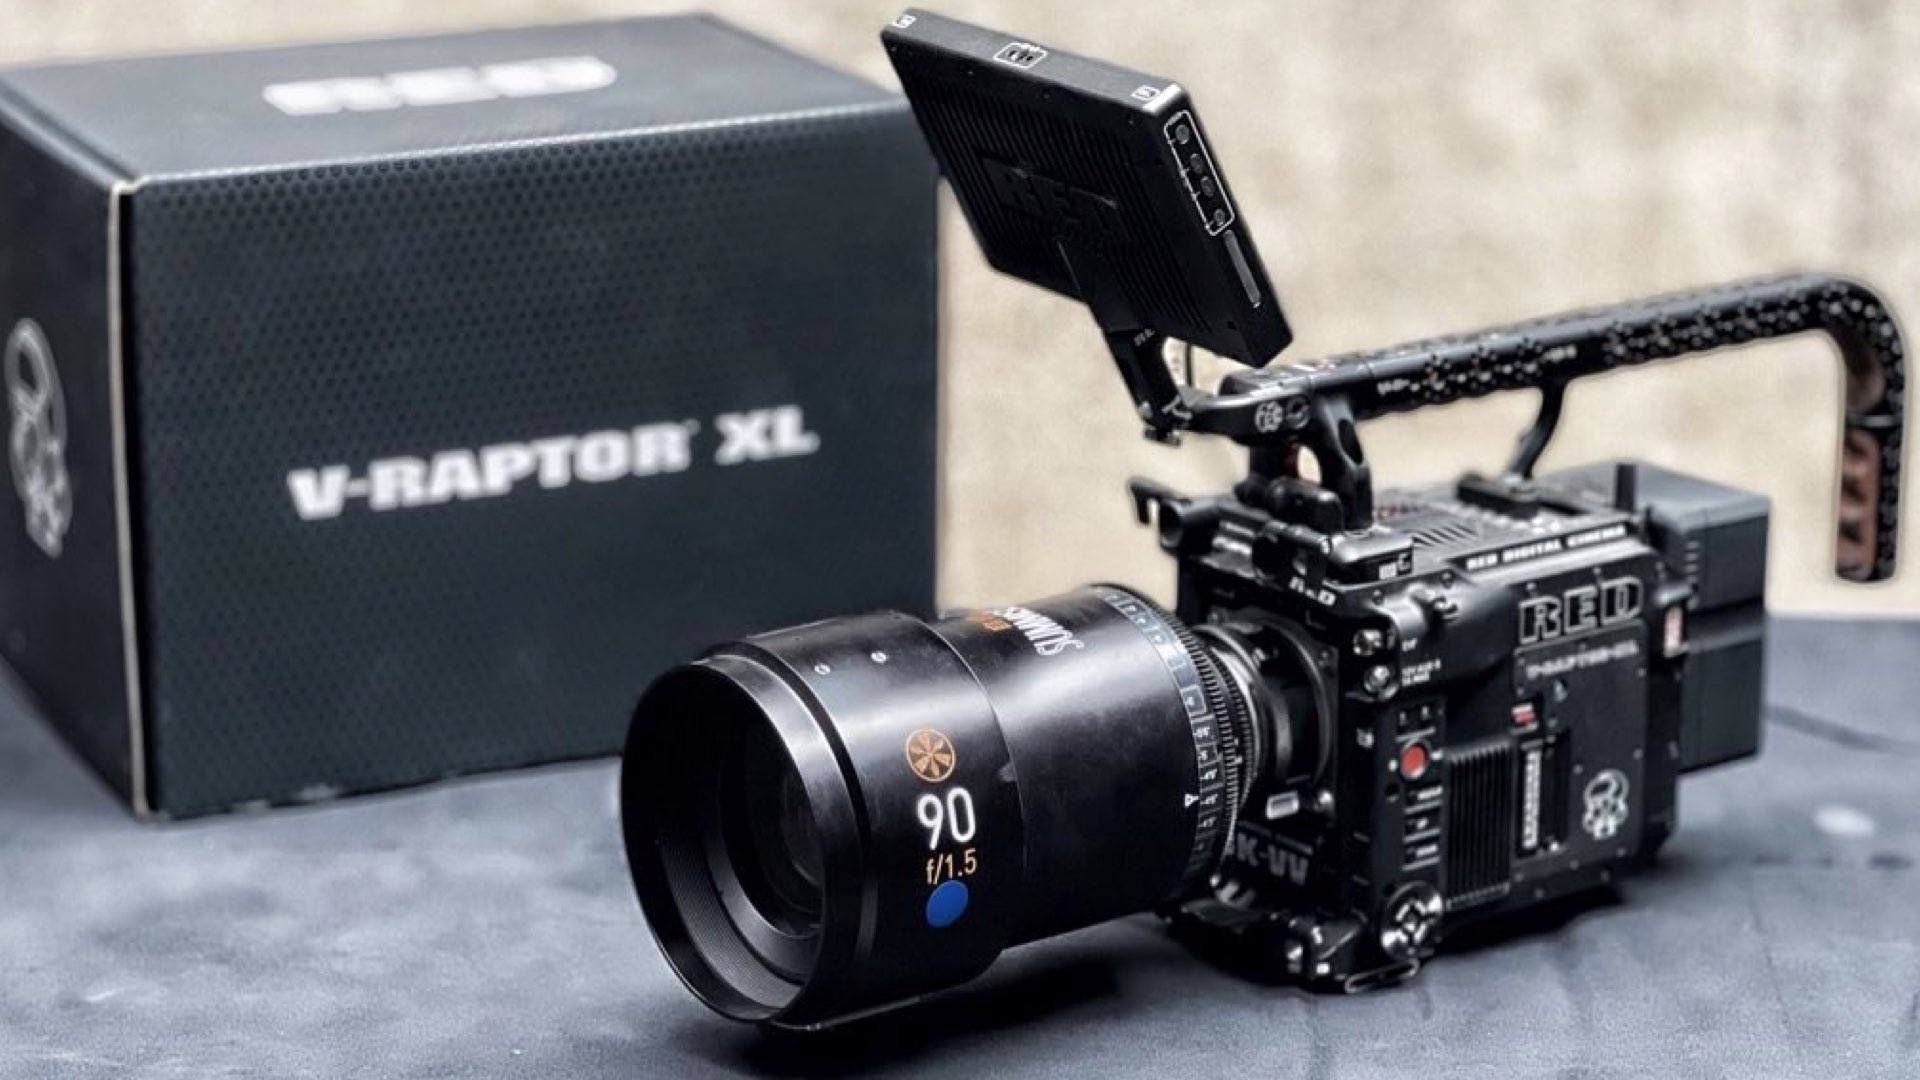 V-Raptor XL and the Summiscope lens. Credit - Zack Snyder